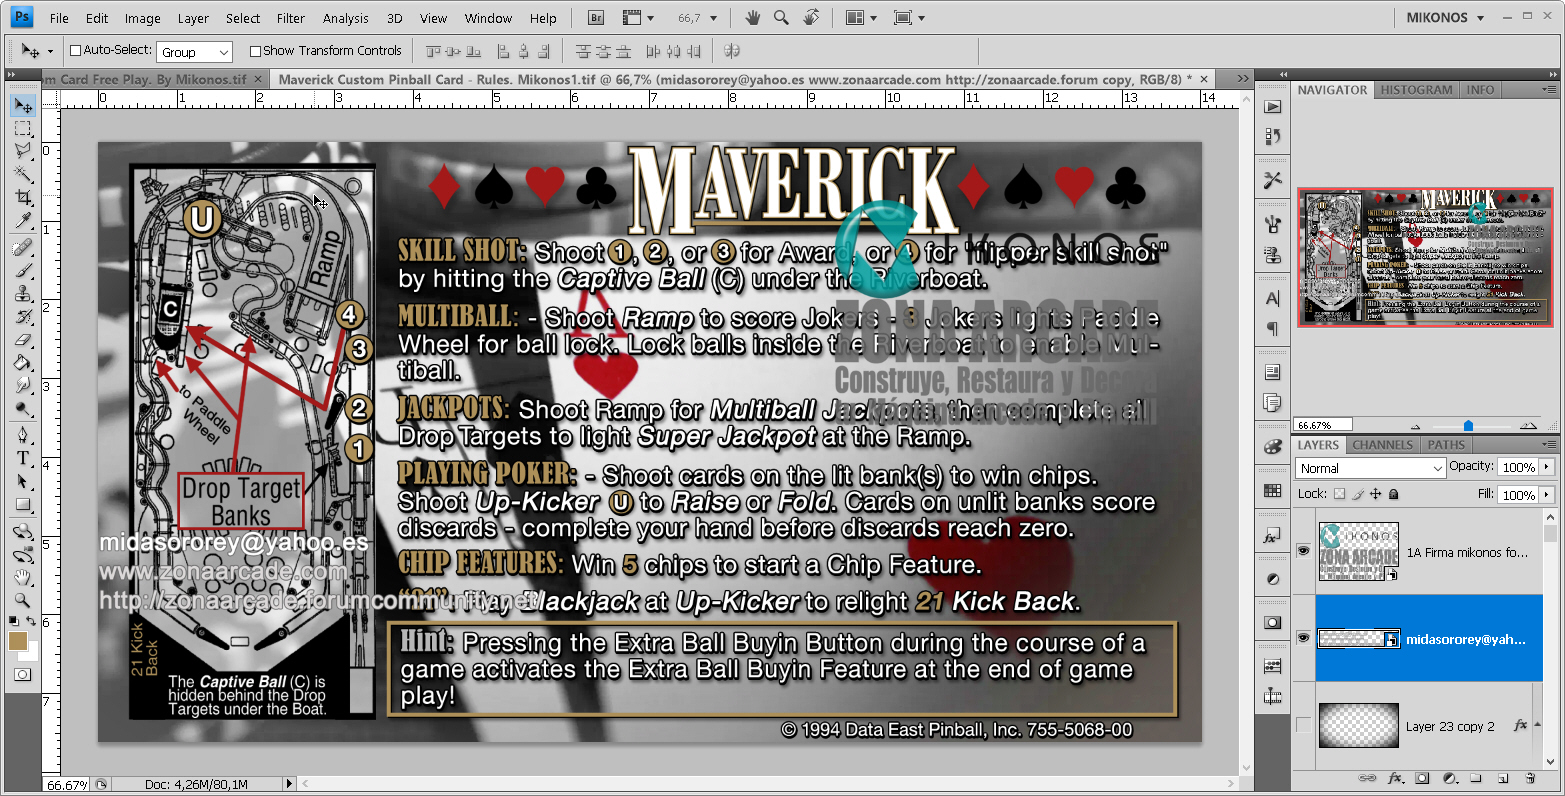 Maverick Custom Pinball Card - Rules. Mikonos1